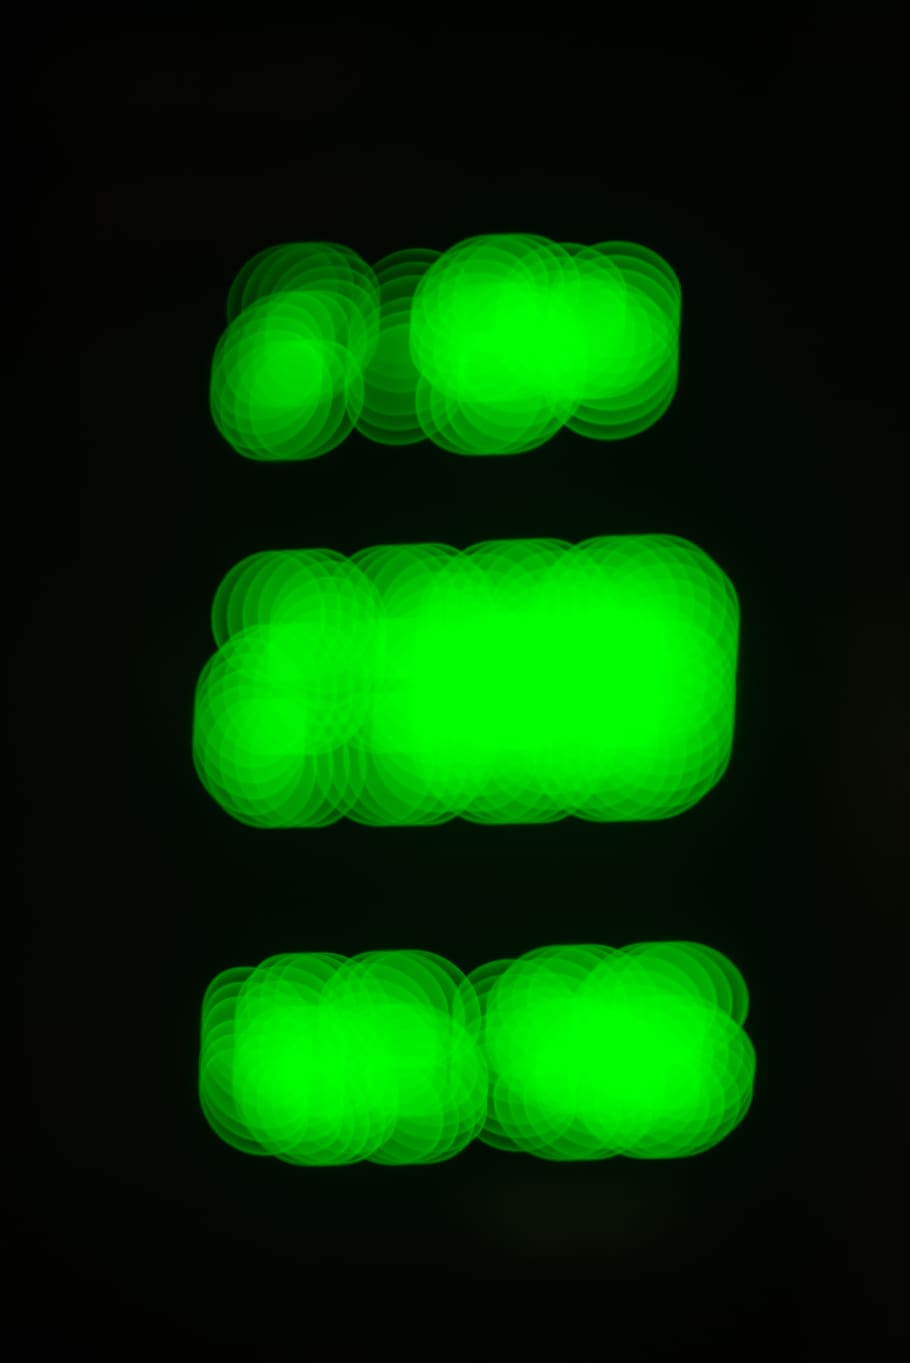 Hd Wallpaper Light Traffic Light Green Highlights Oof Out Of